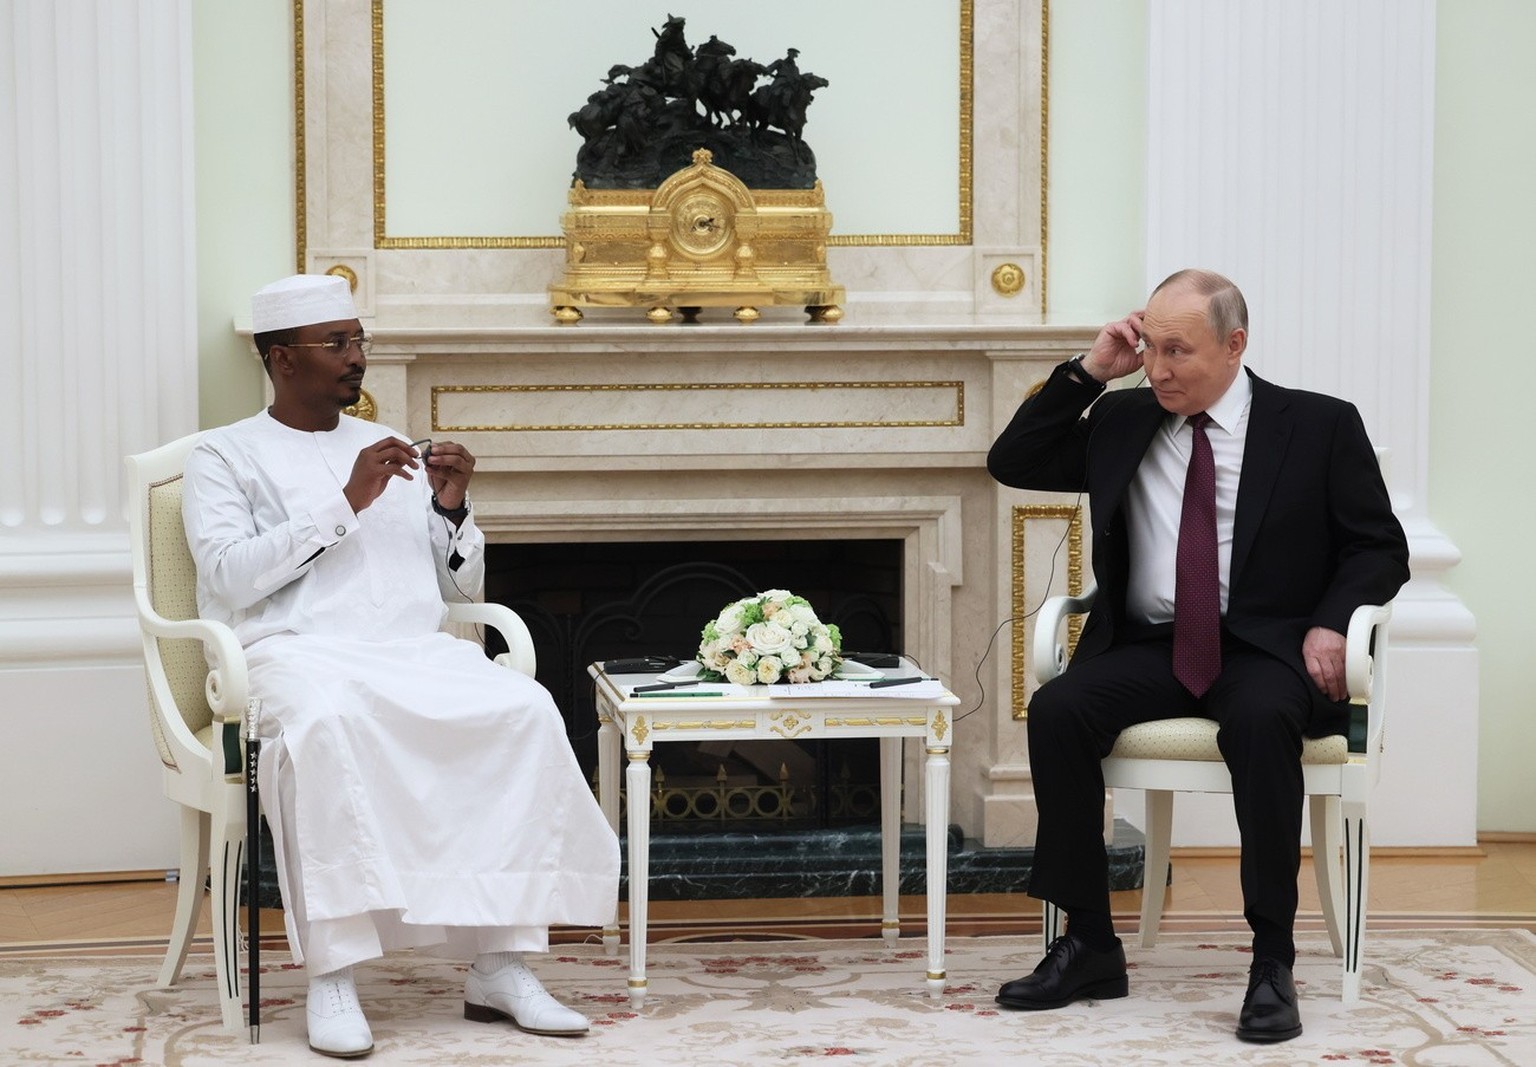 russlands griff nach afrika – wo der kreml überall soldaten hinschickt